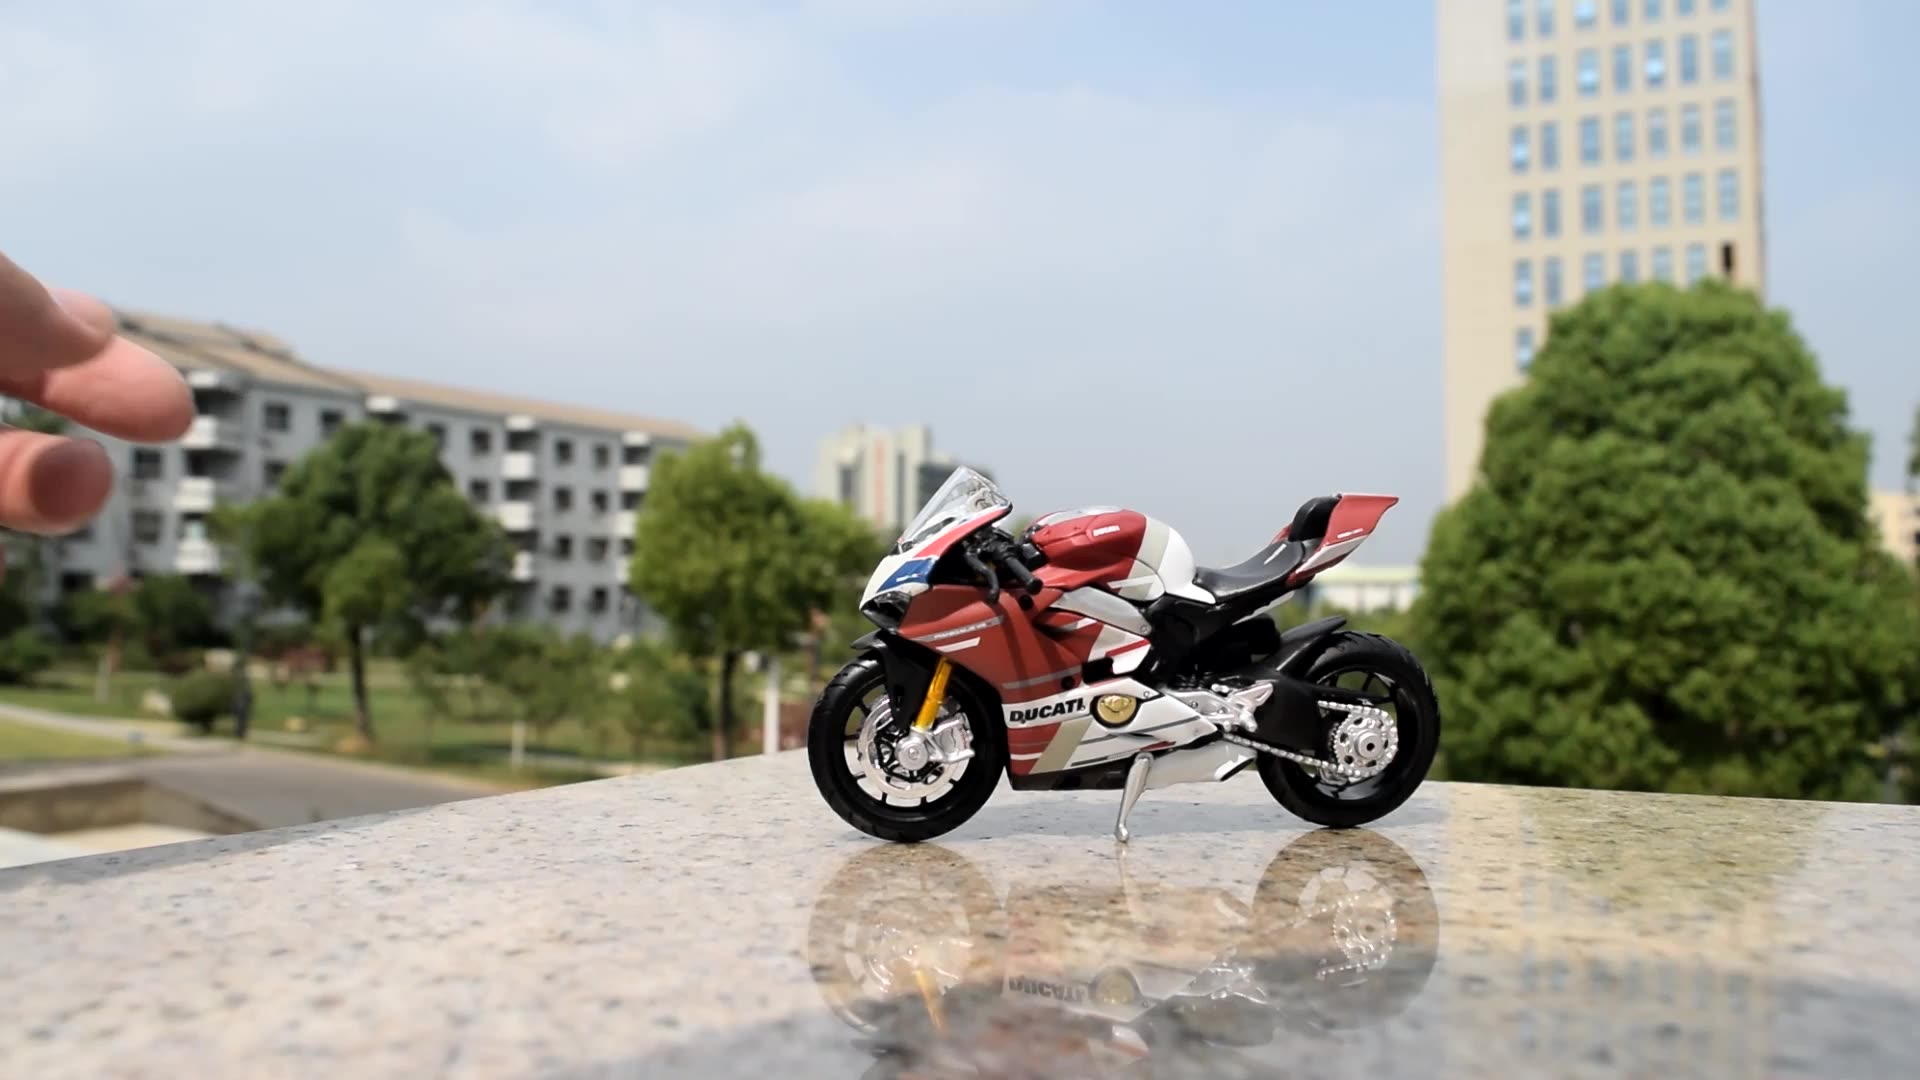 Ducati V4S Panigale Meritor 그림 1/18 합금 오토바이 모델 장식 케이크